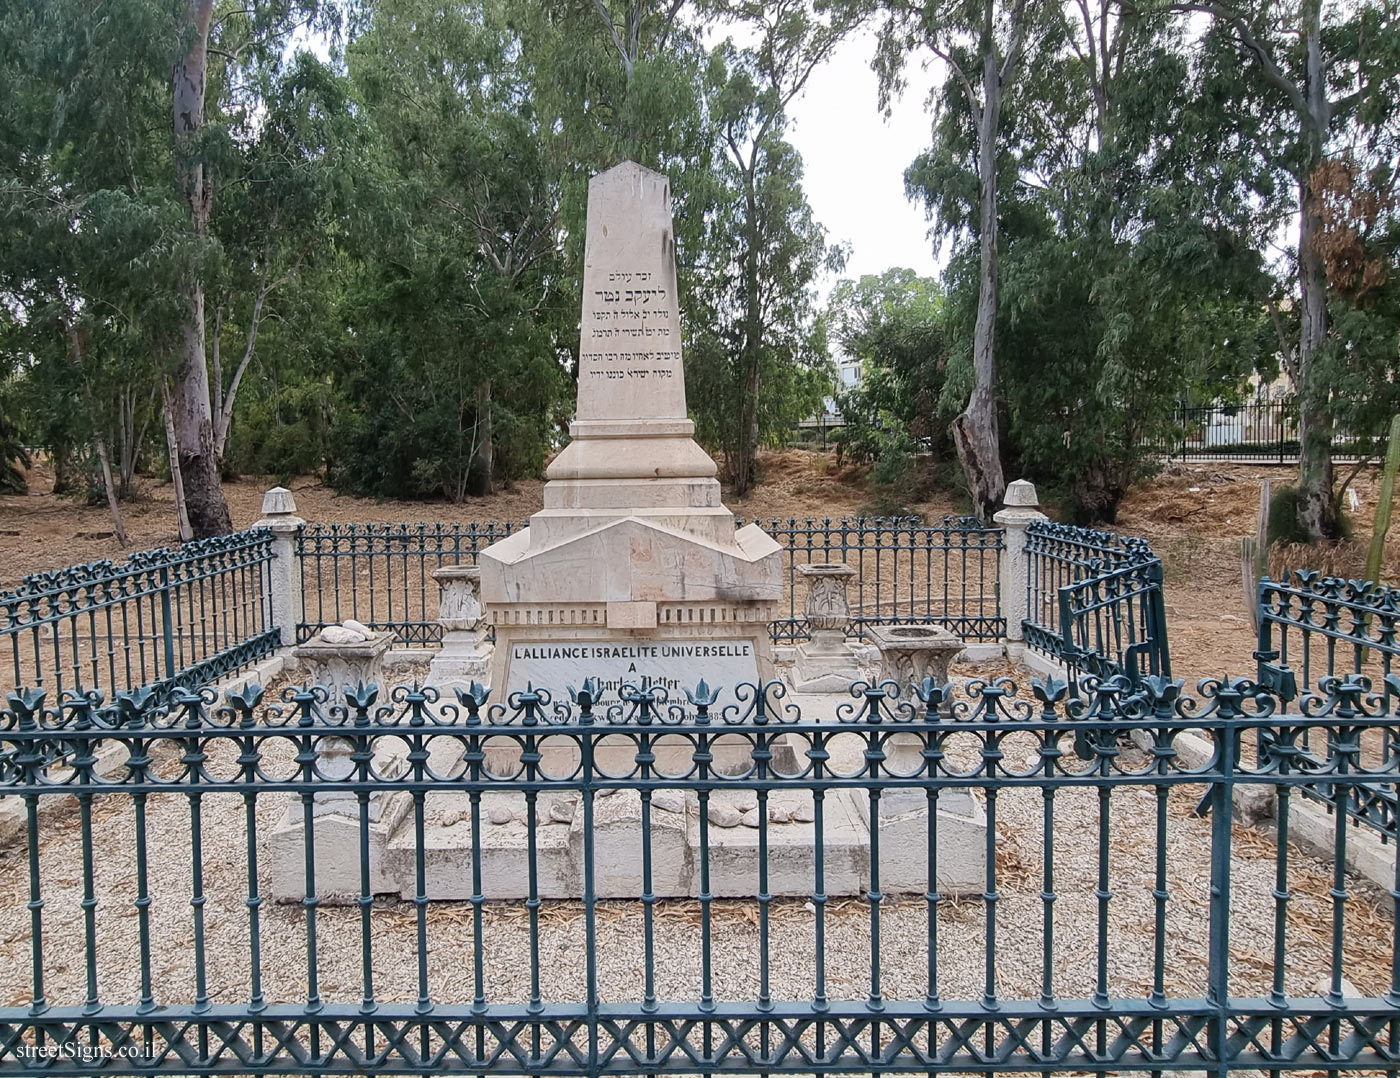 Mikve Israel - Heritage Sites in Israel - The Grave of Carl Neter - Yosef Serlin St 8, Holon, Israel